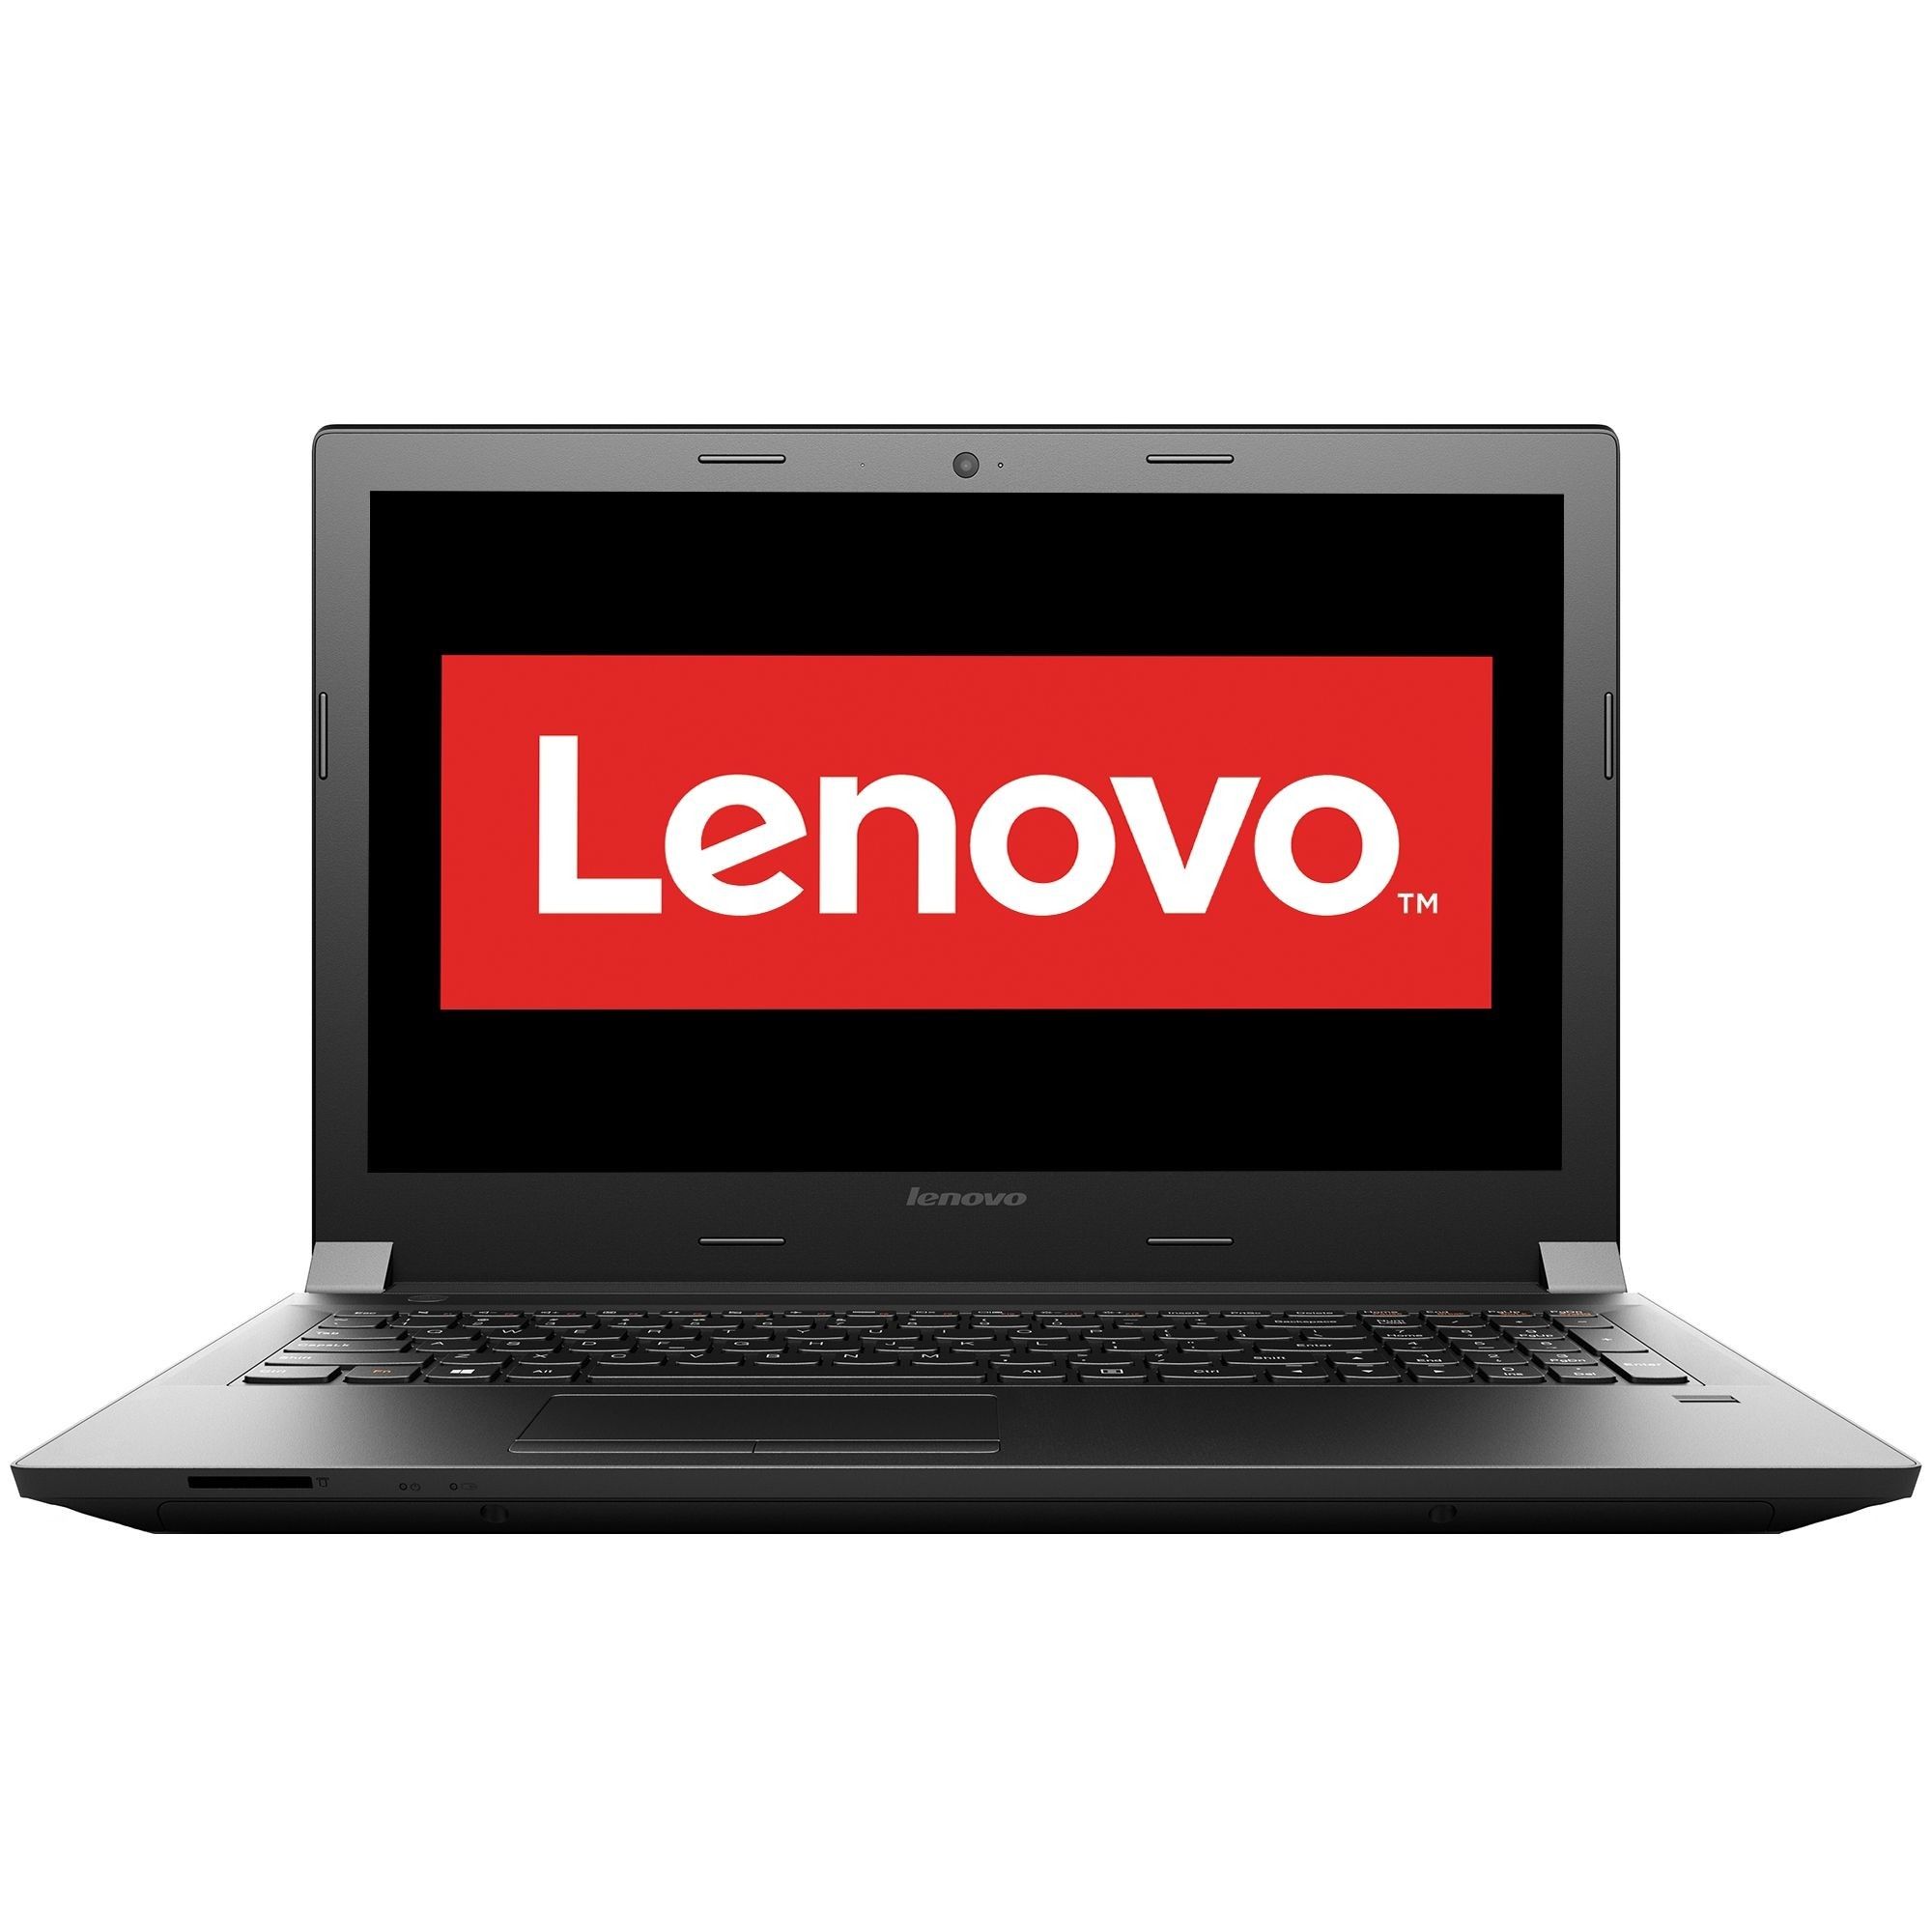  Laptop Lenovo B50-80, Intel Core i7-5500U, 4GB DDR3, HDD 500GB, AMD Radeon R5 M230 2GB, Free DOS 